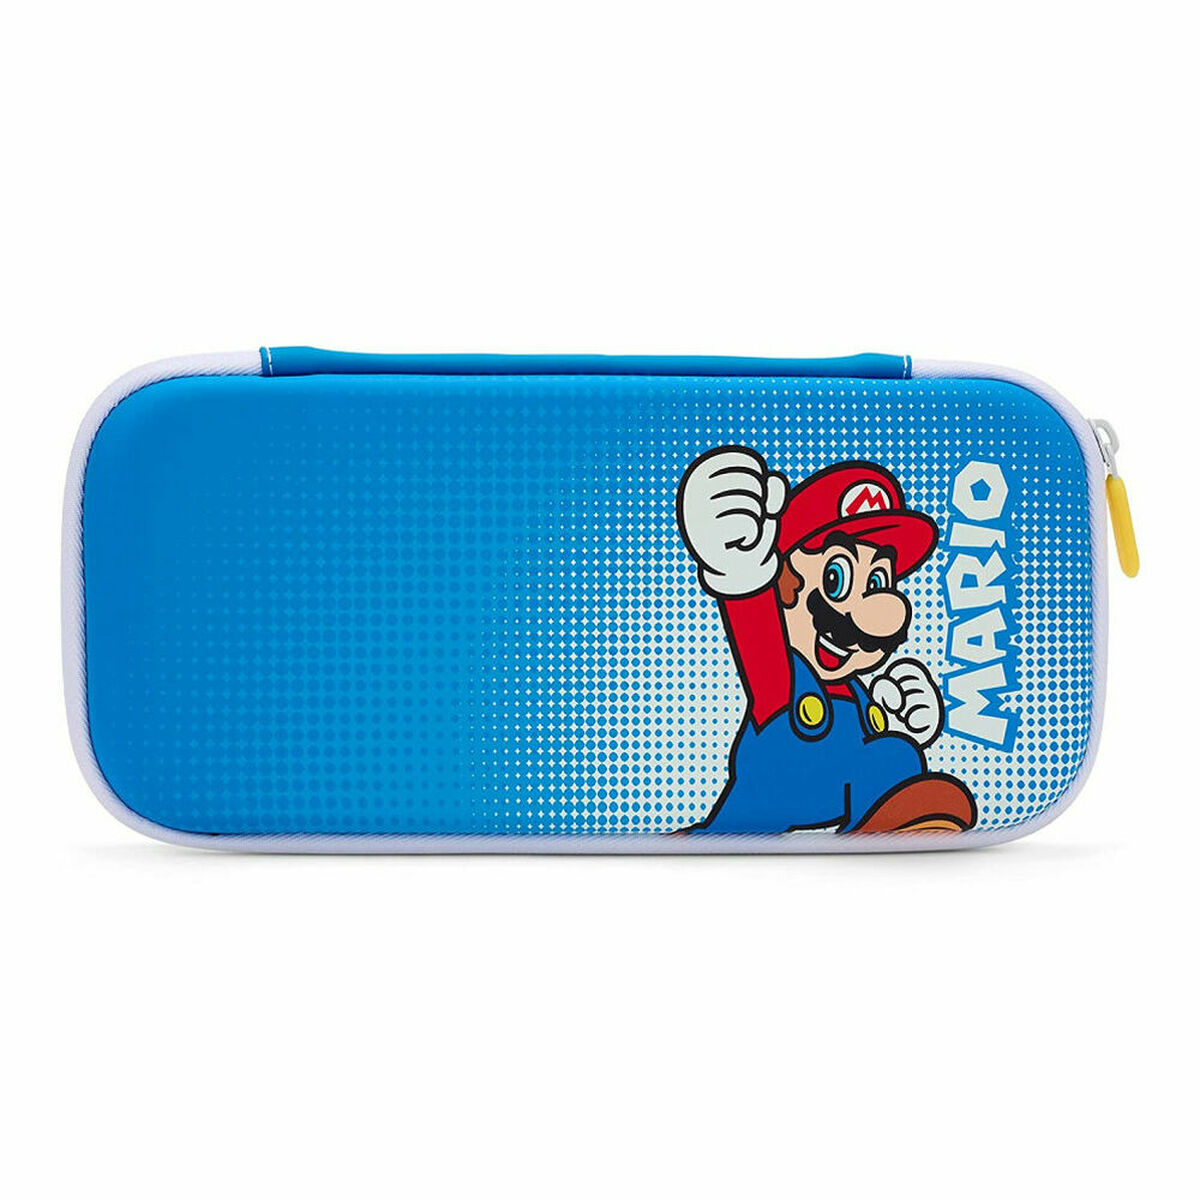 Case for Nintendo Switch Powera 1522649-01 Super Mario Bros